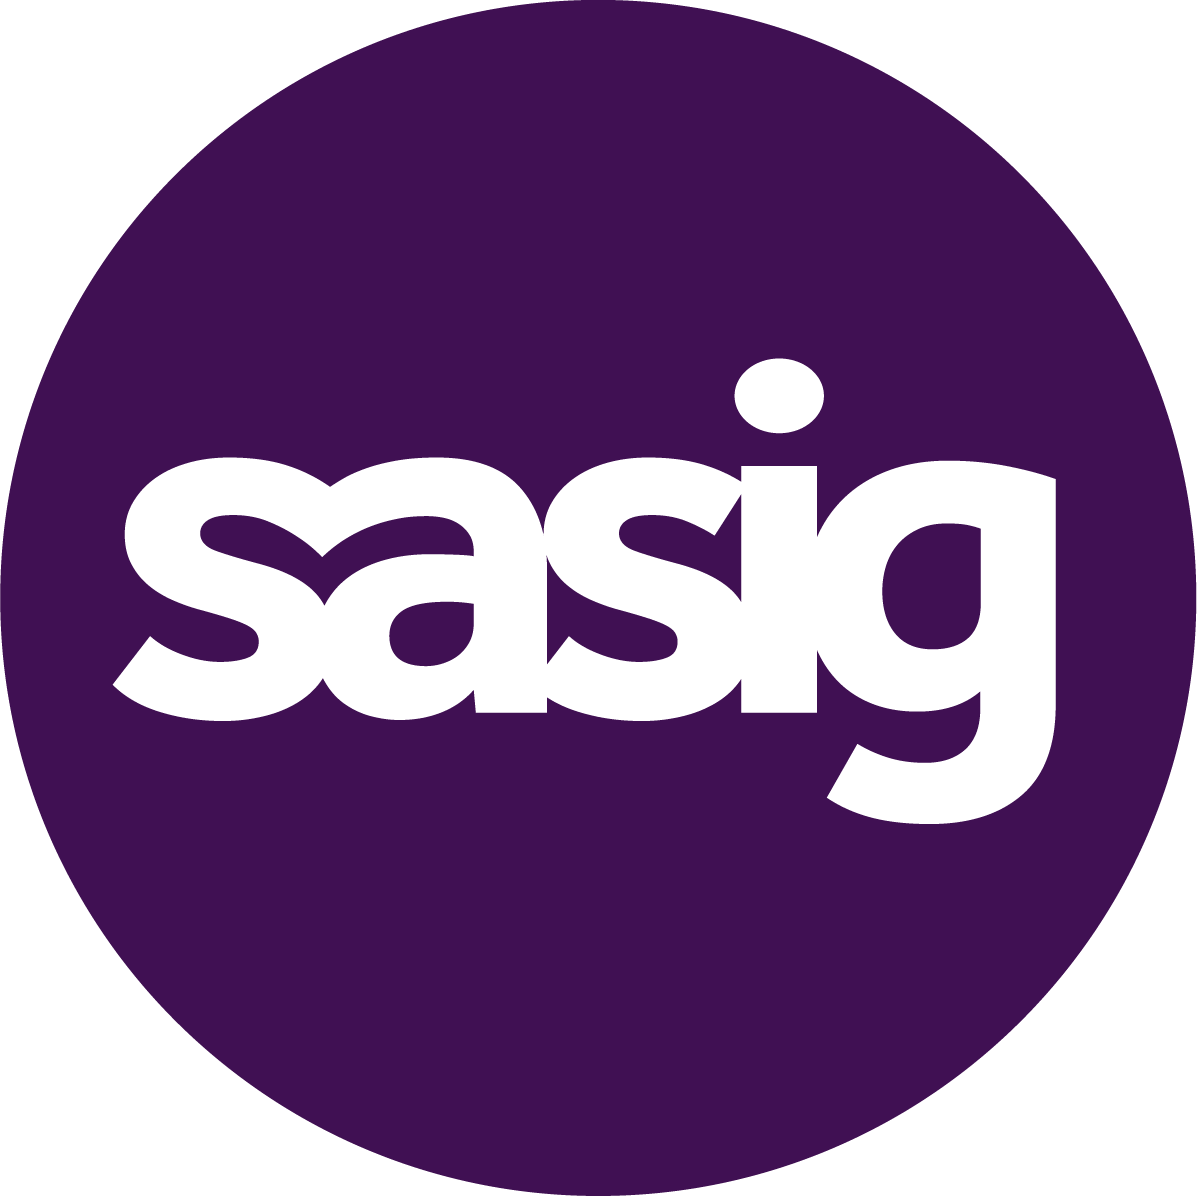 SAGIG – The Security Awareness Special Interest Group